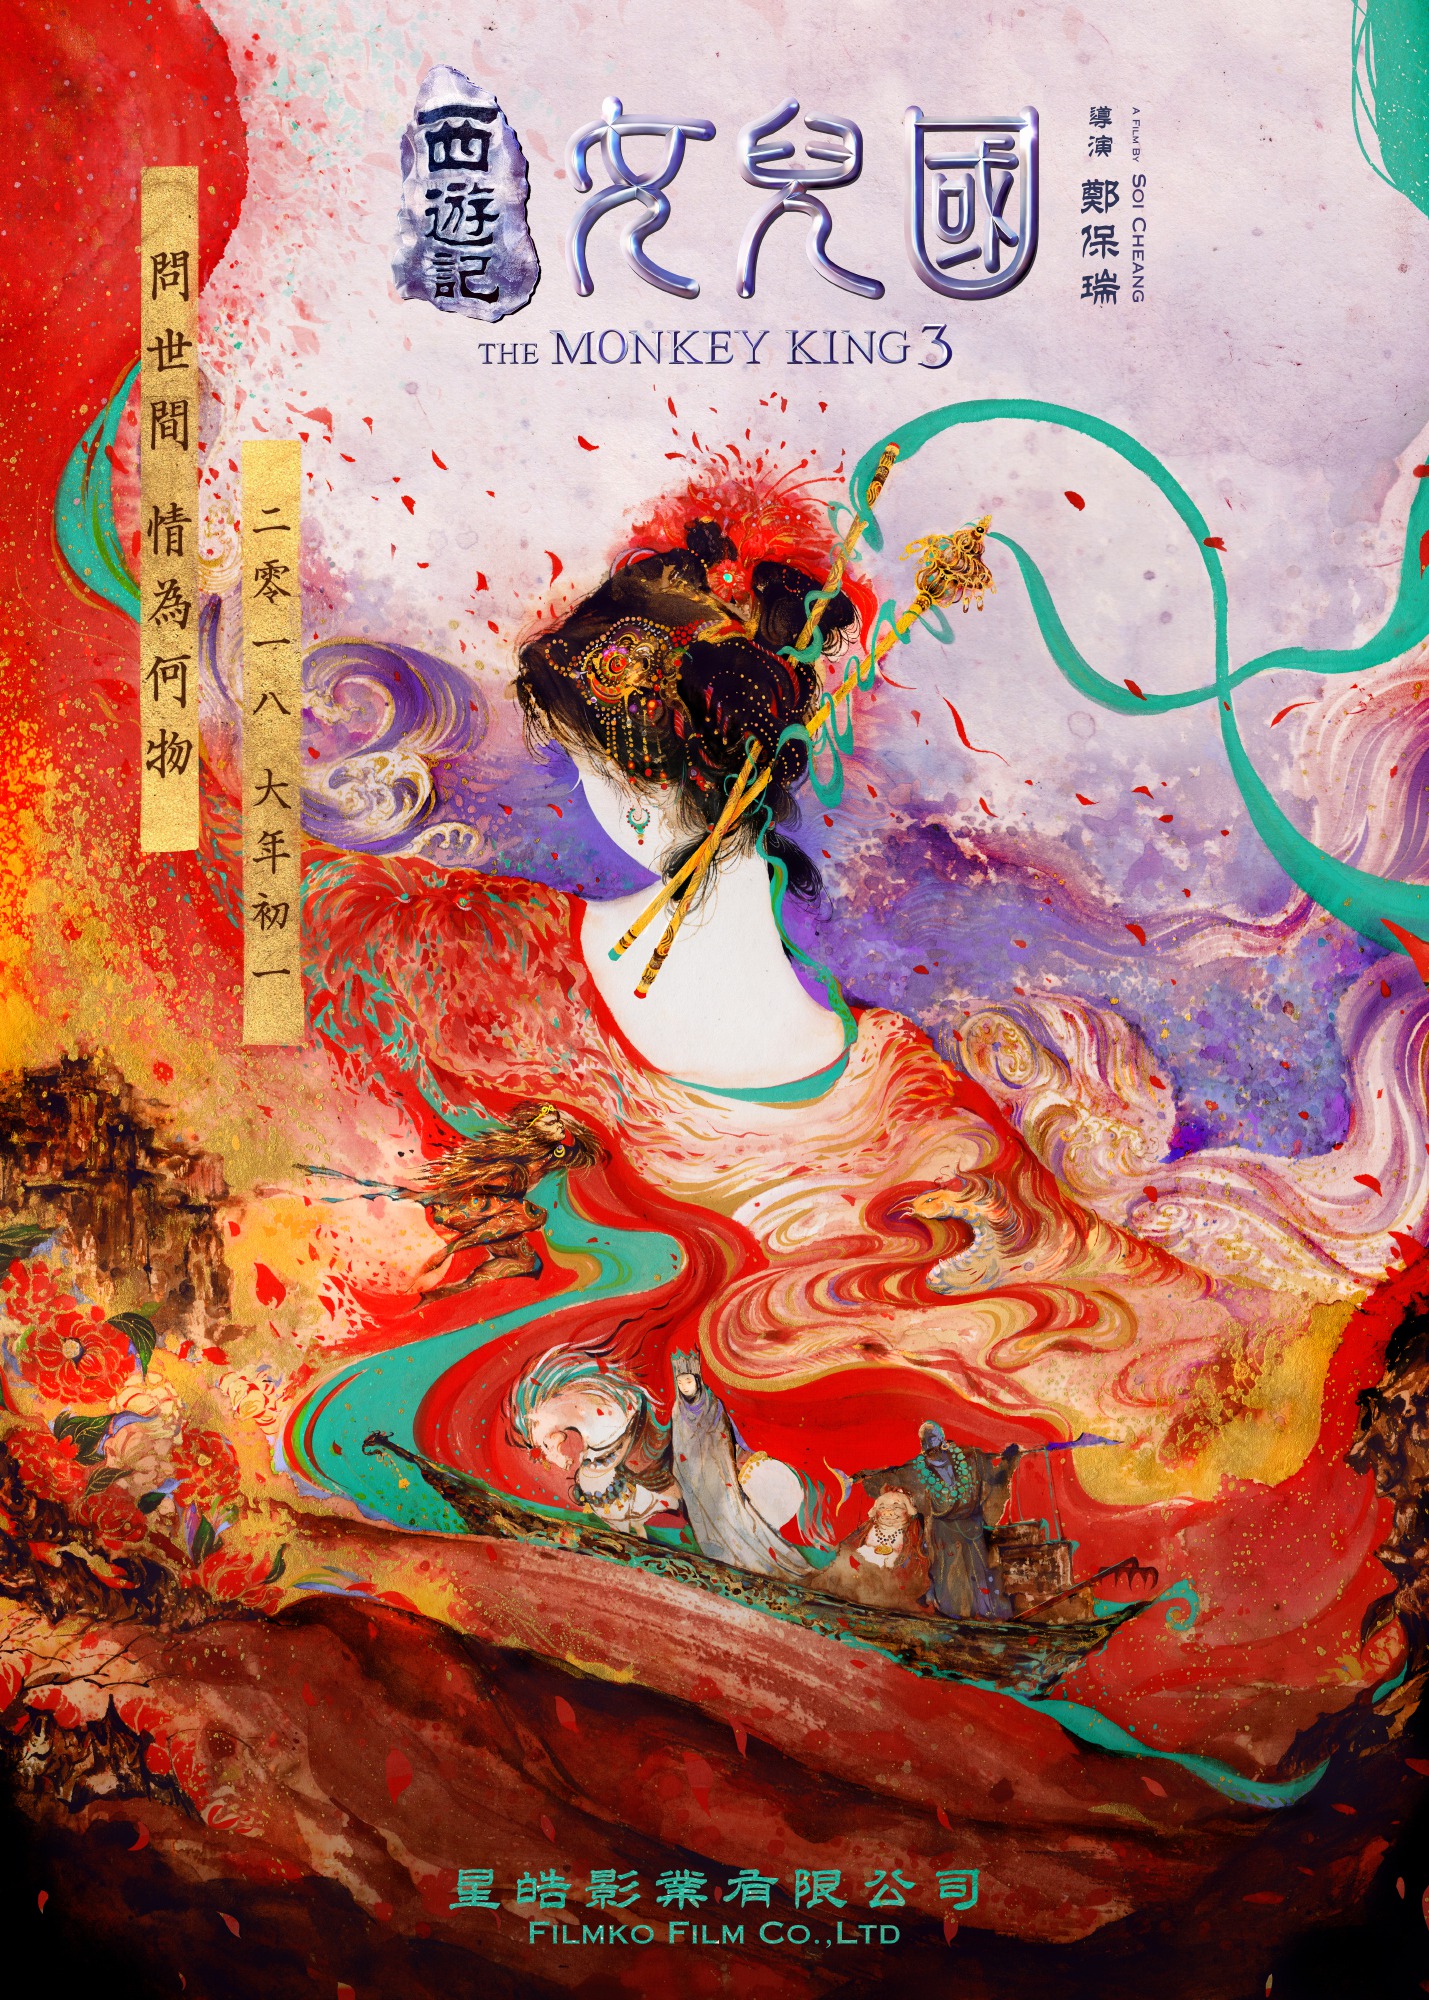 Mega Sized Movie Poster Image for The Monkey King 3 (#2 of 2)